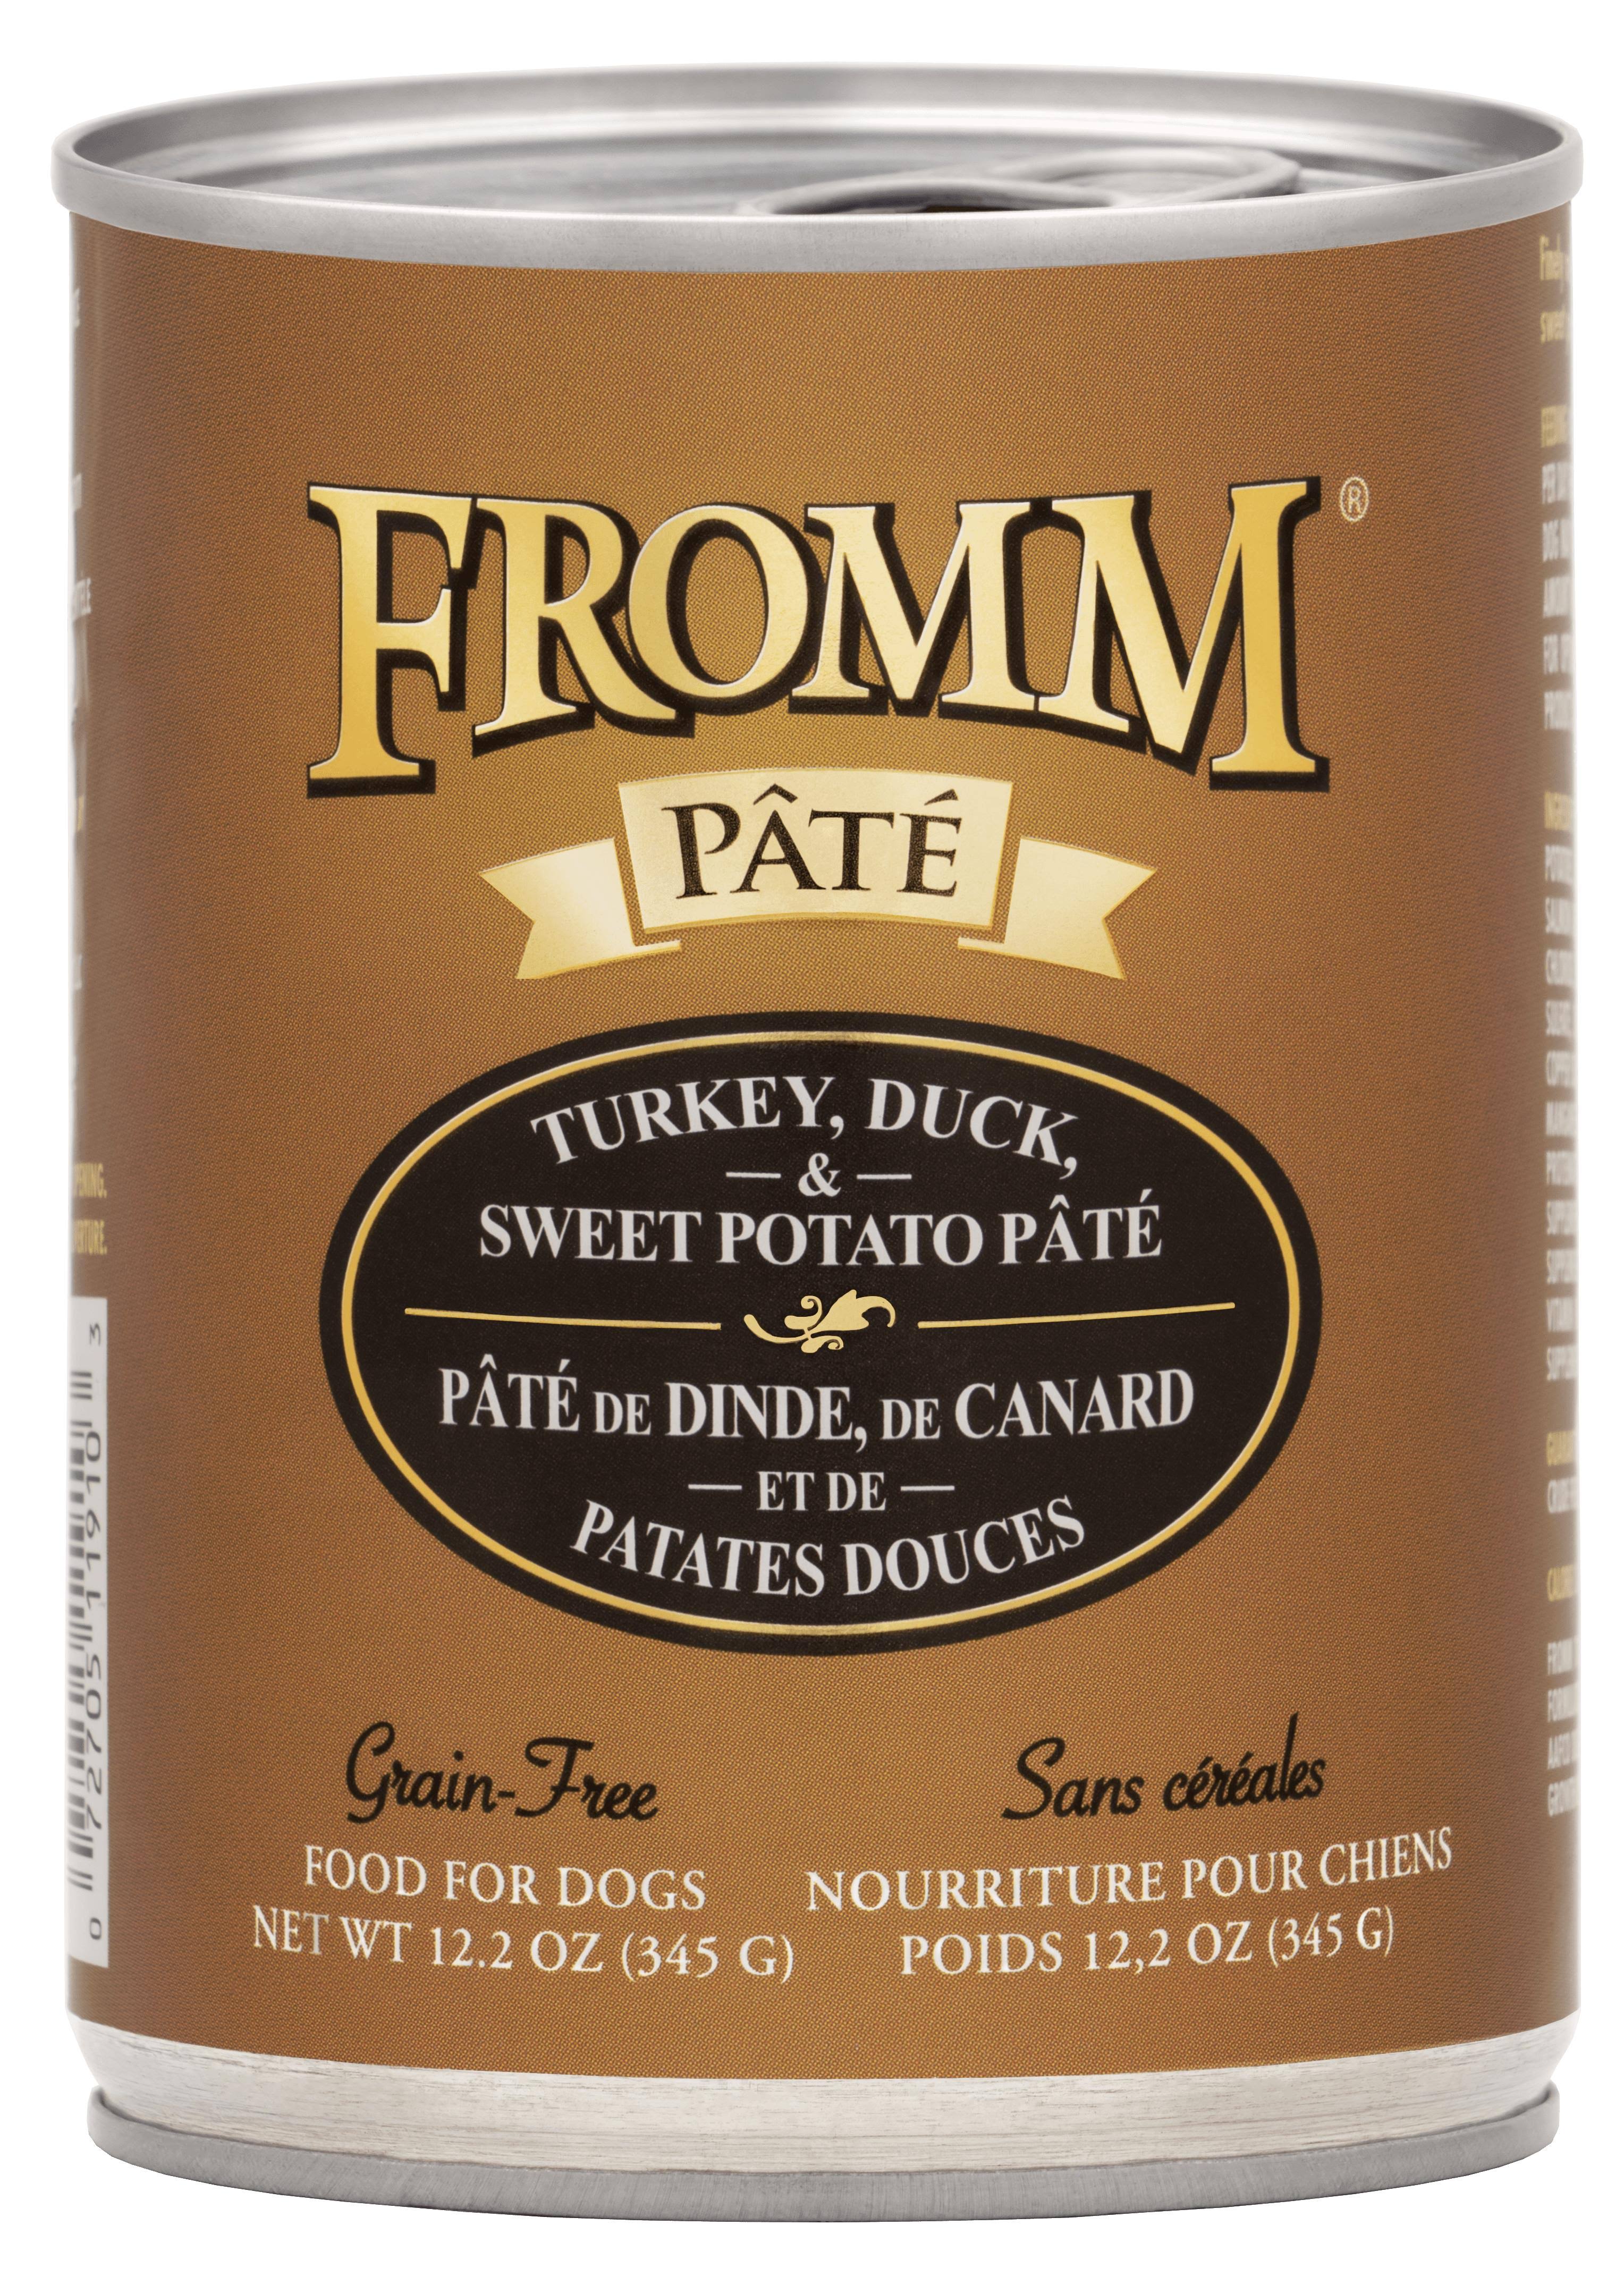 Fromm Turkey, Duck & Sweet Potato Pate Canned Dog Food 12.2 oz